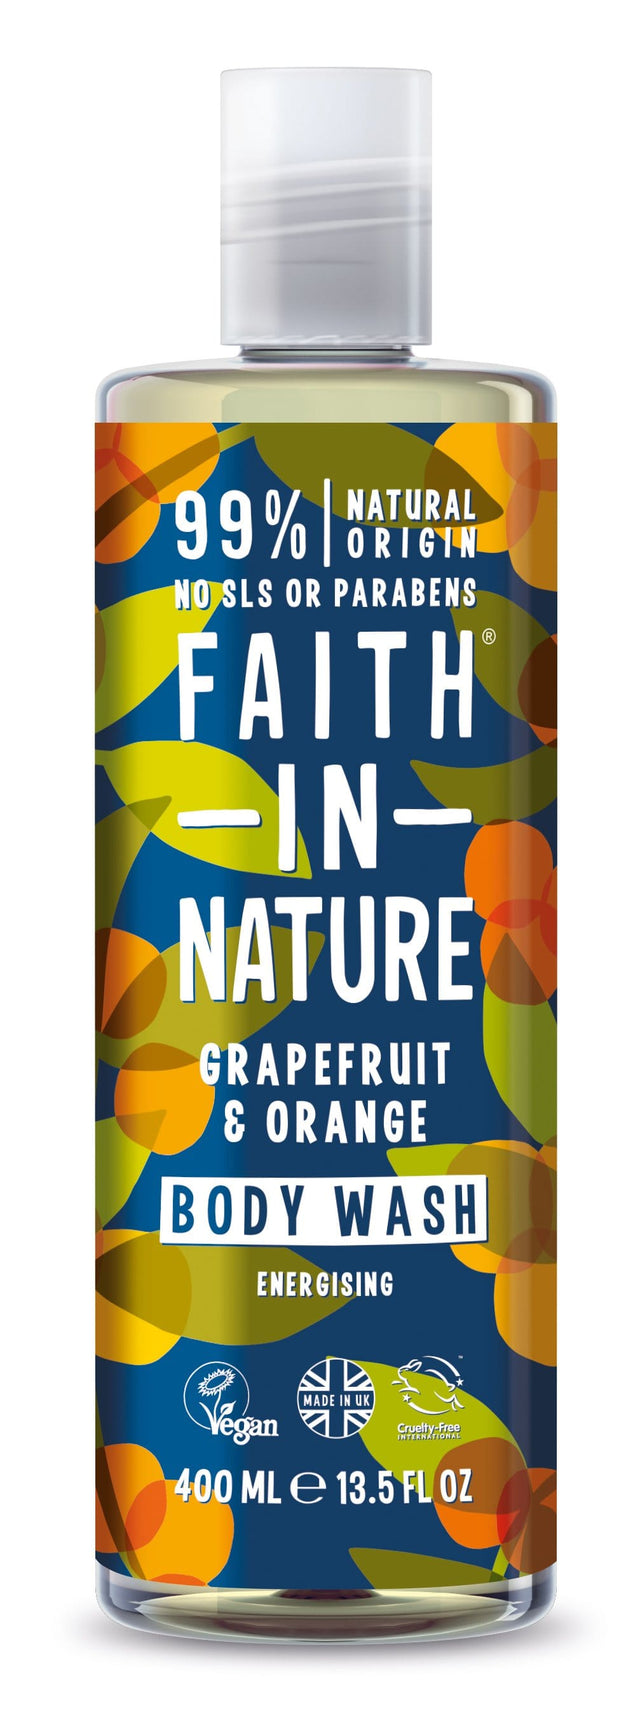 Faith in Nature Grapefruit & Orange Body Wash, 400ml